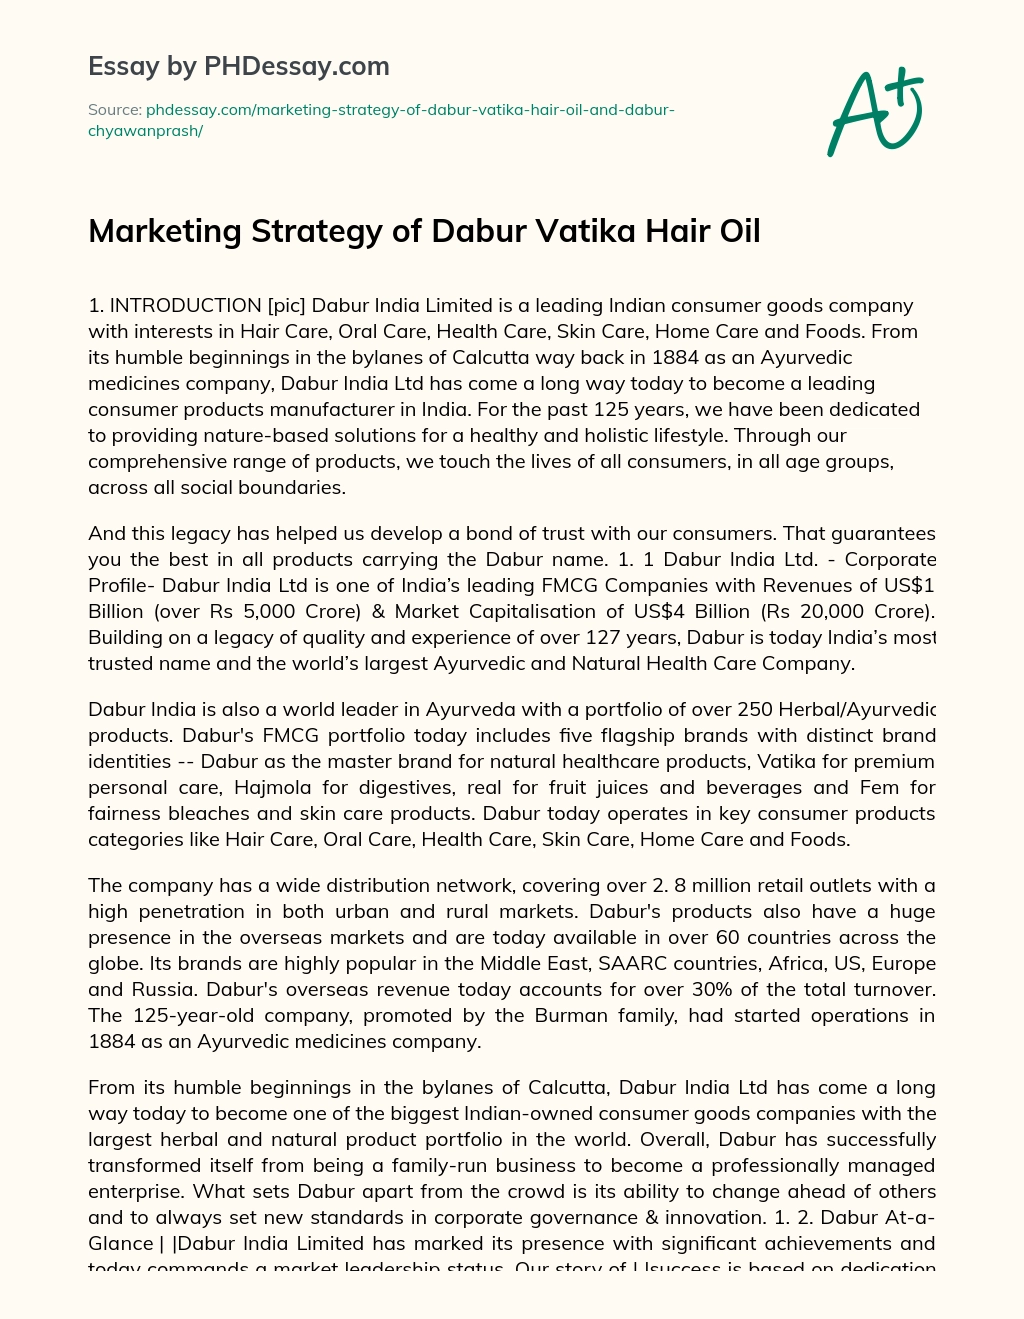 Marketing Strategy of Dabur Vatika Hair Oil essay